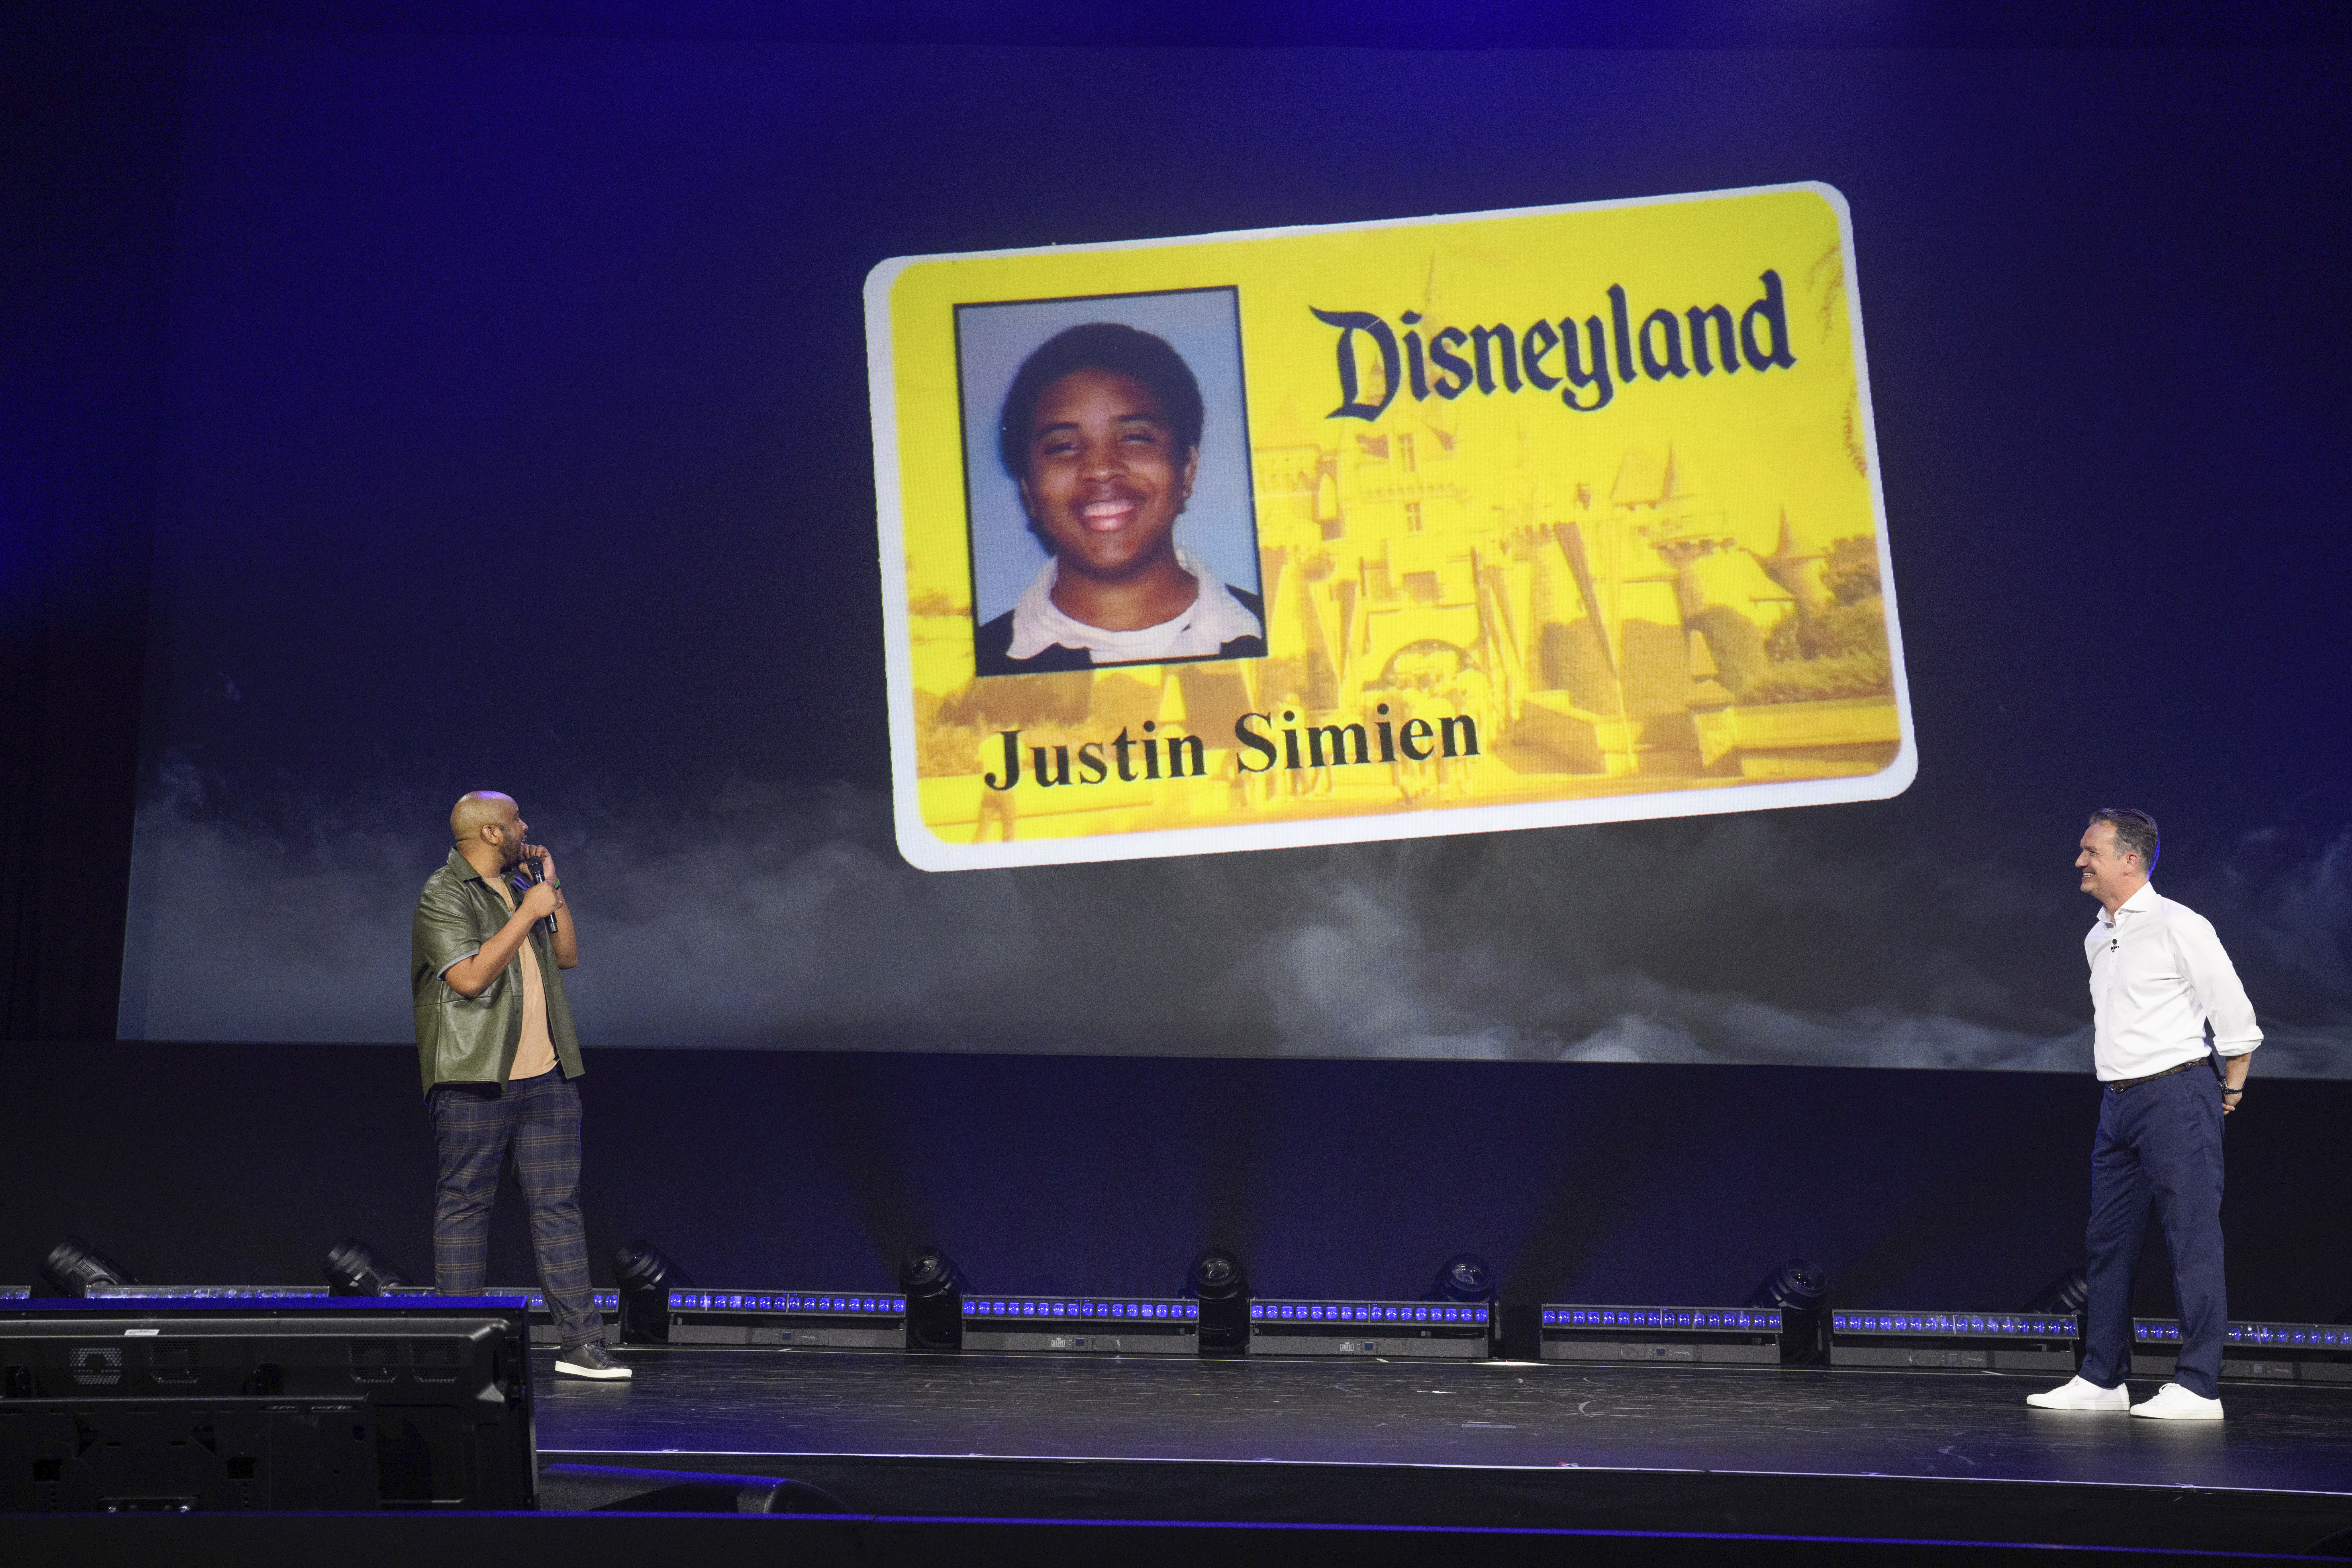 Disneyland cast id Justin Simien